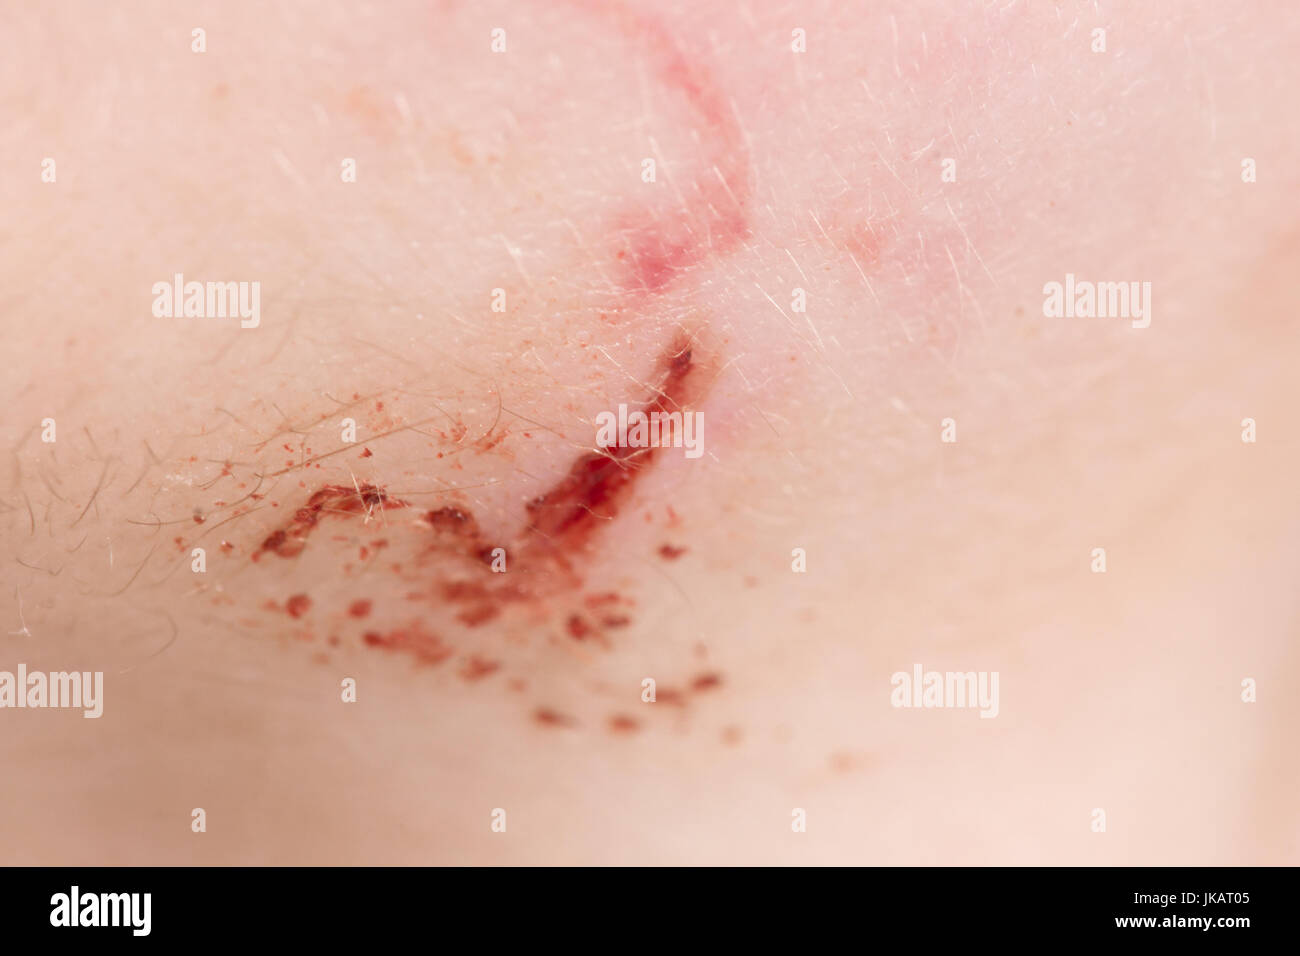 Bleeding fresh wound on a person skin closeup Stock Photo